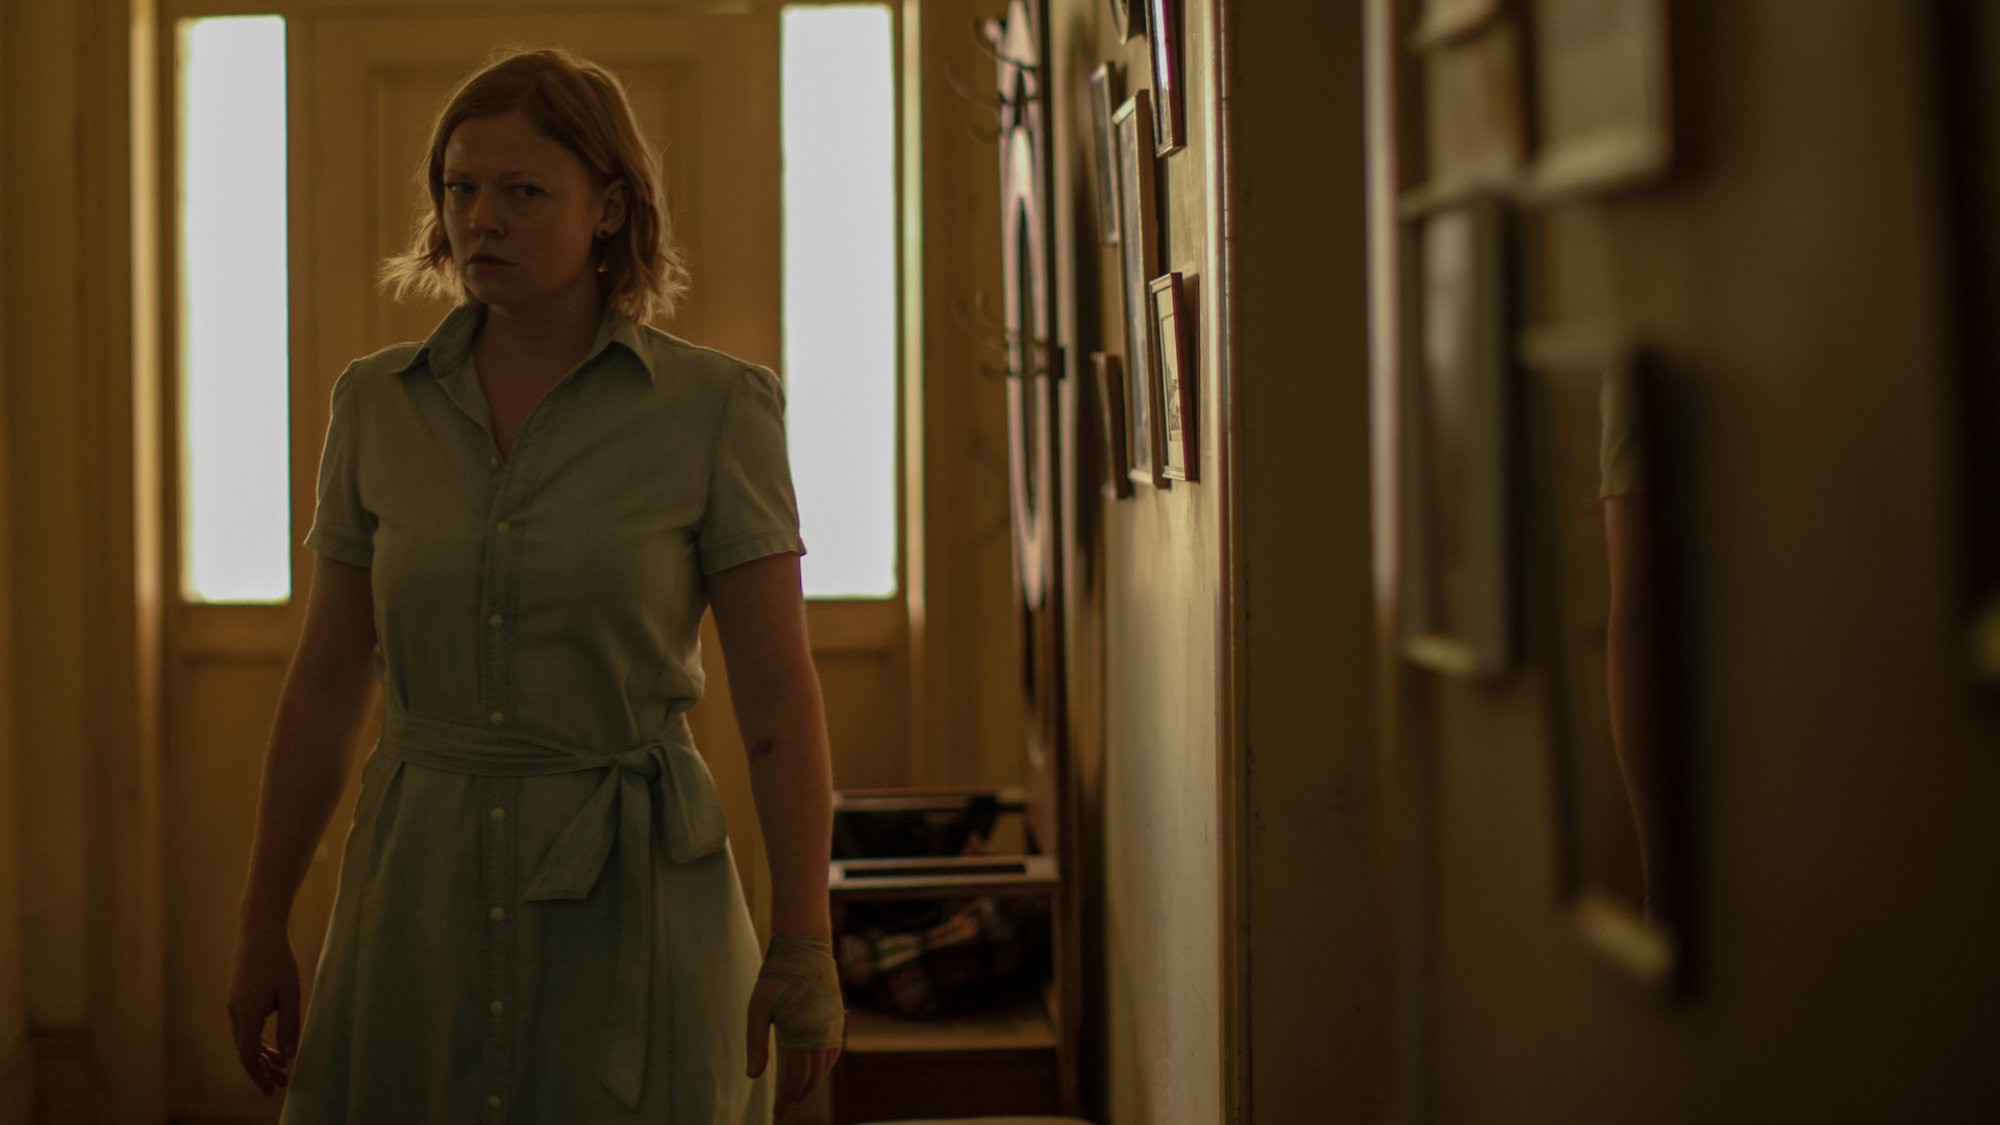 Sarah Snook walks through a dark house in the film "Run Rabbit Run"